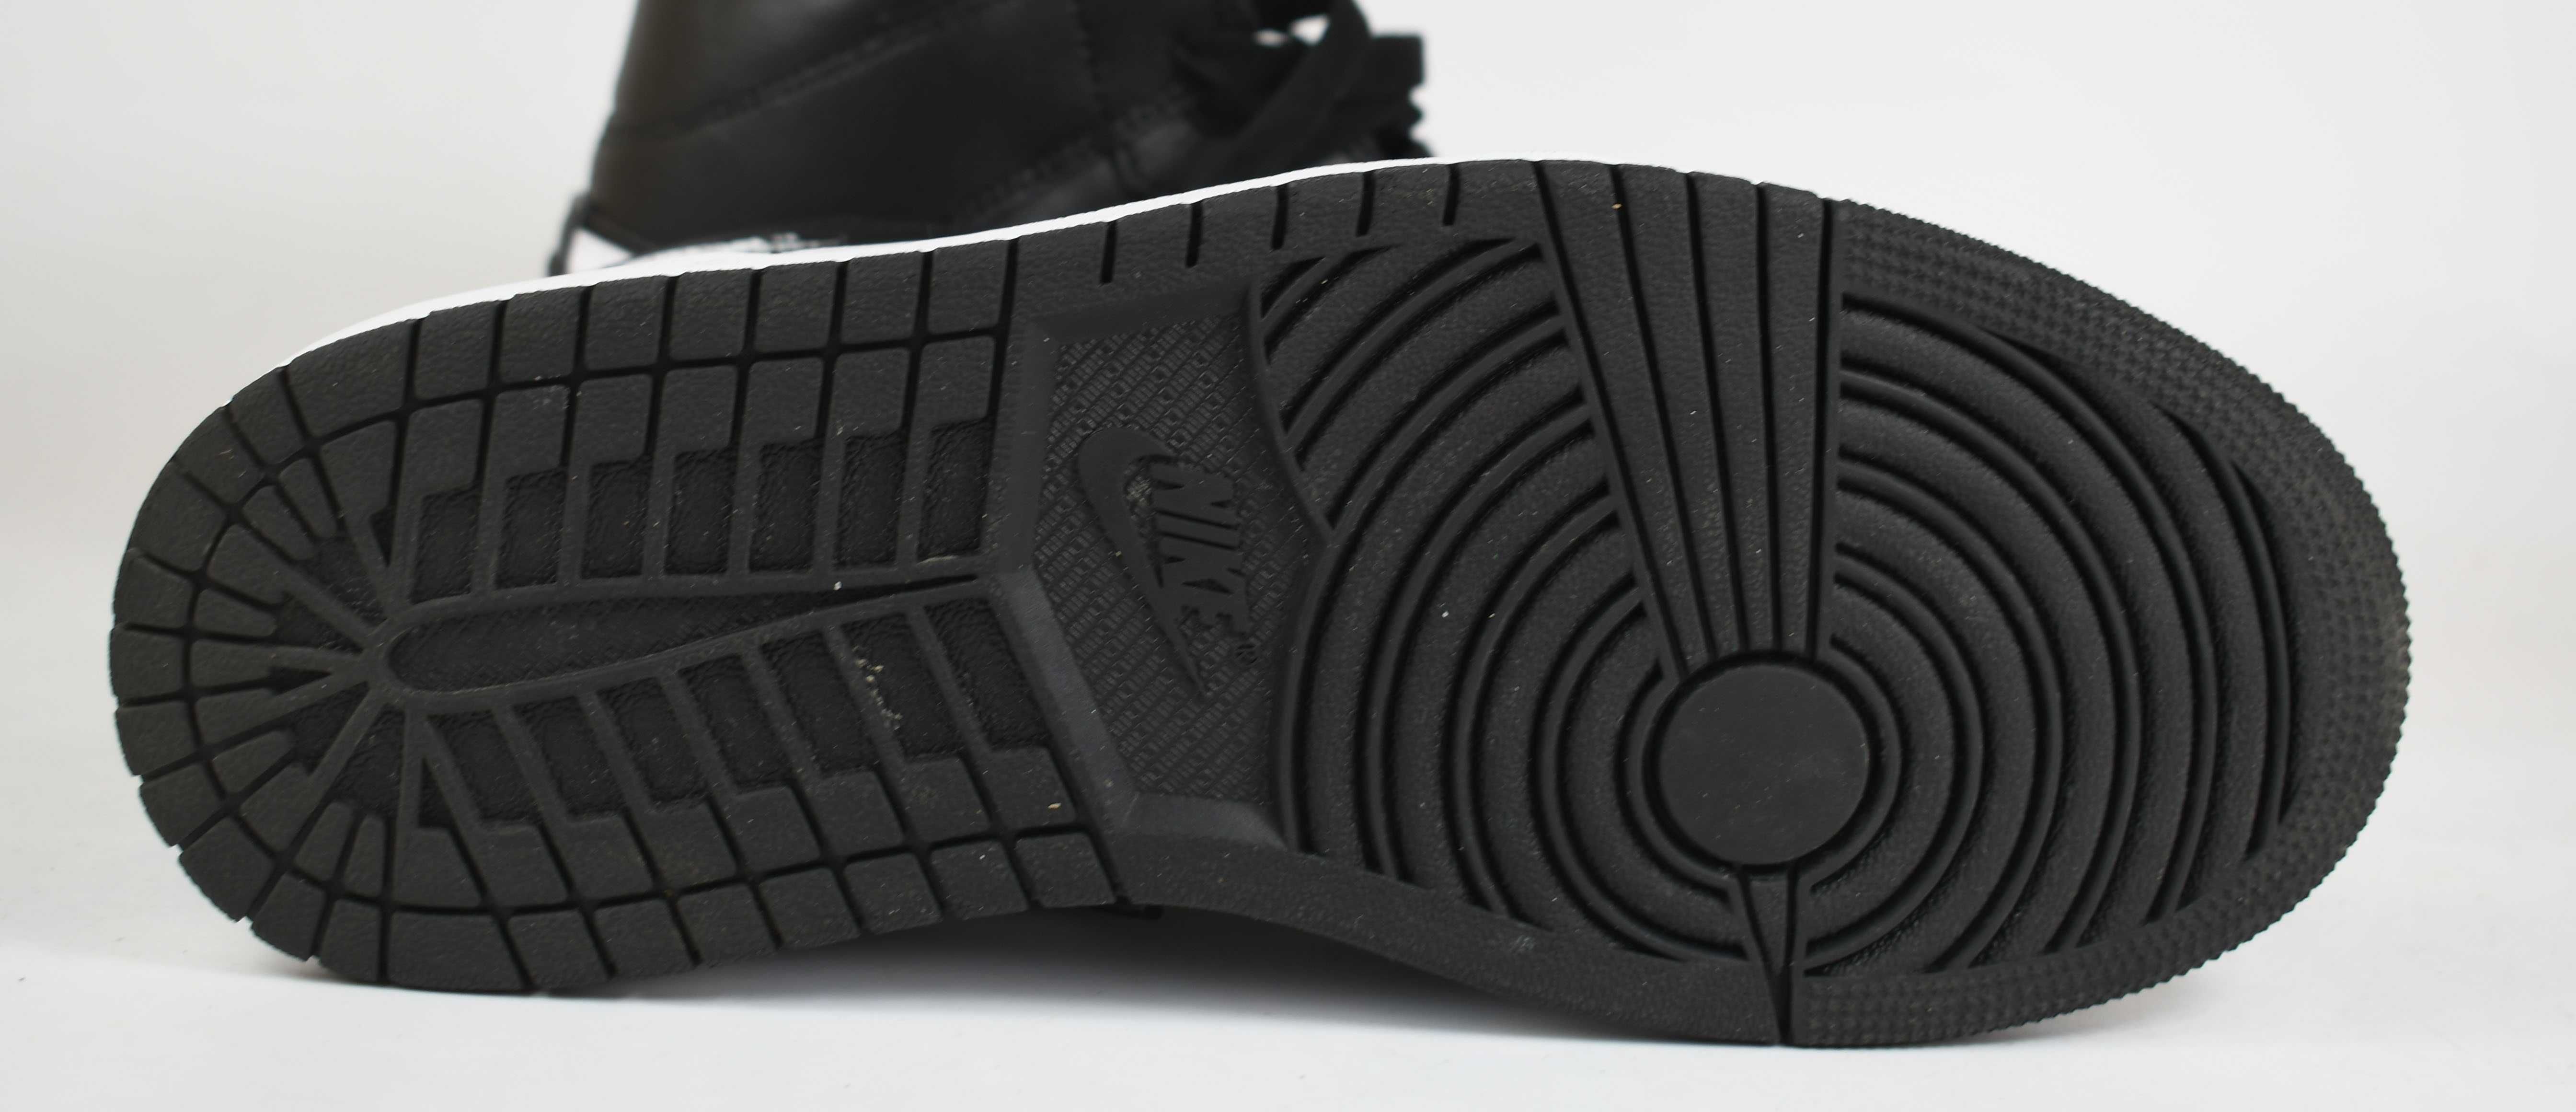 Jak nowe Nike Air Jordan 1 Mid Wmns "Black White" rozmiar 38